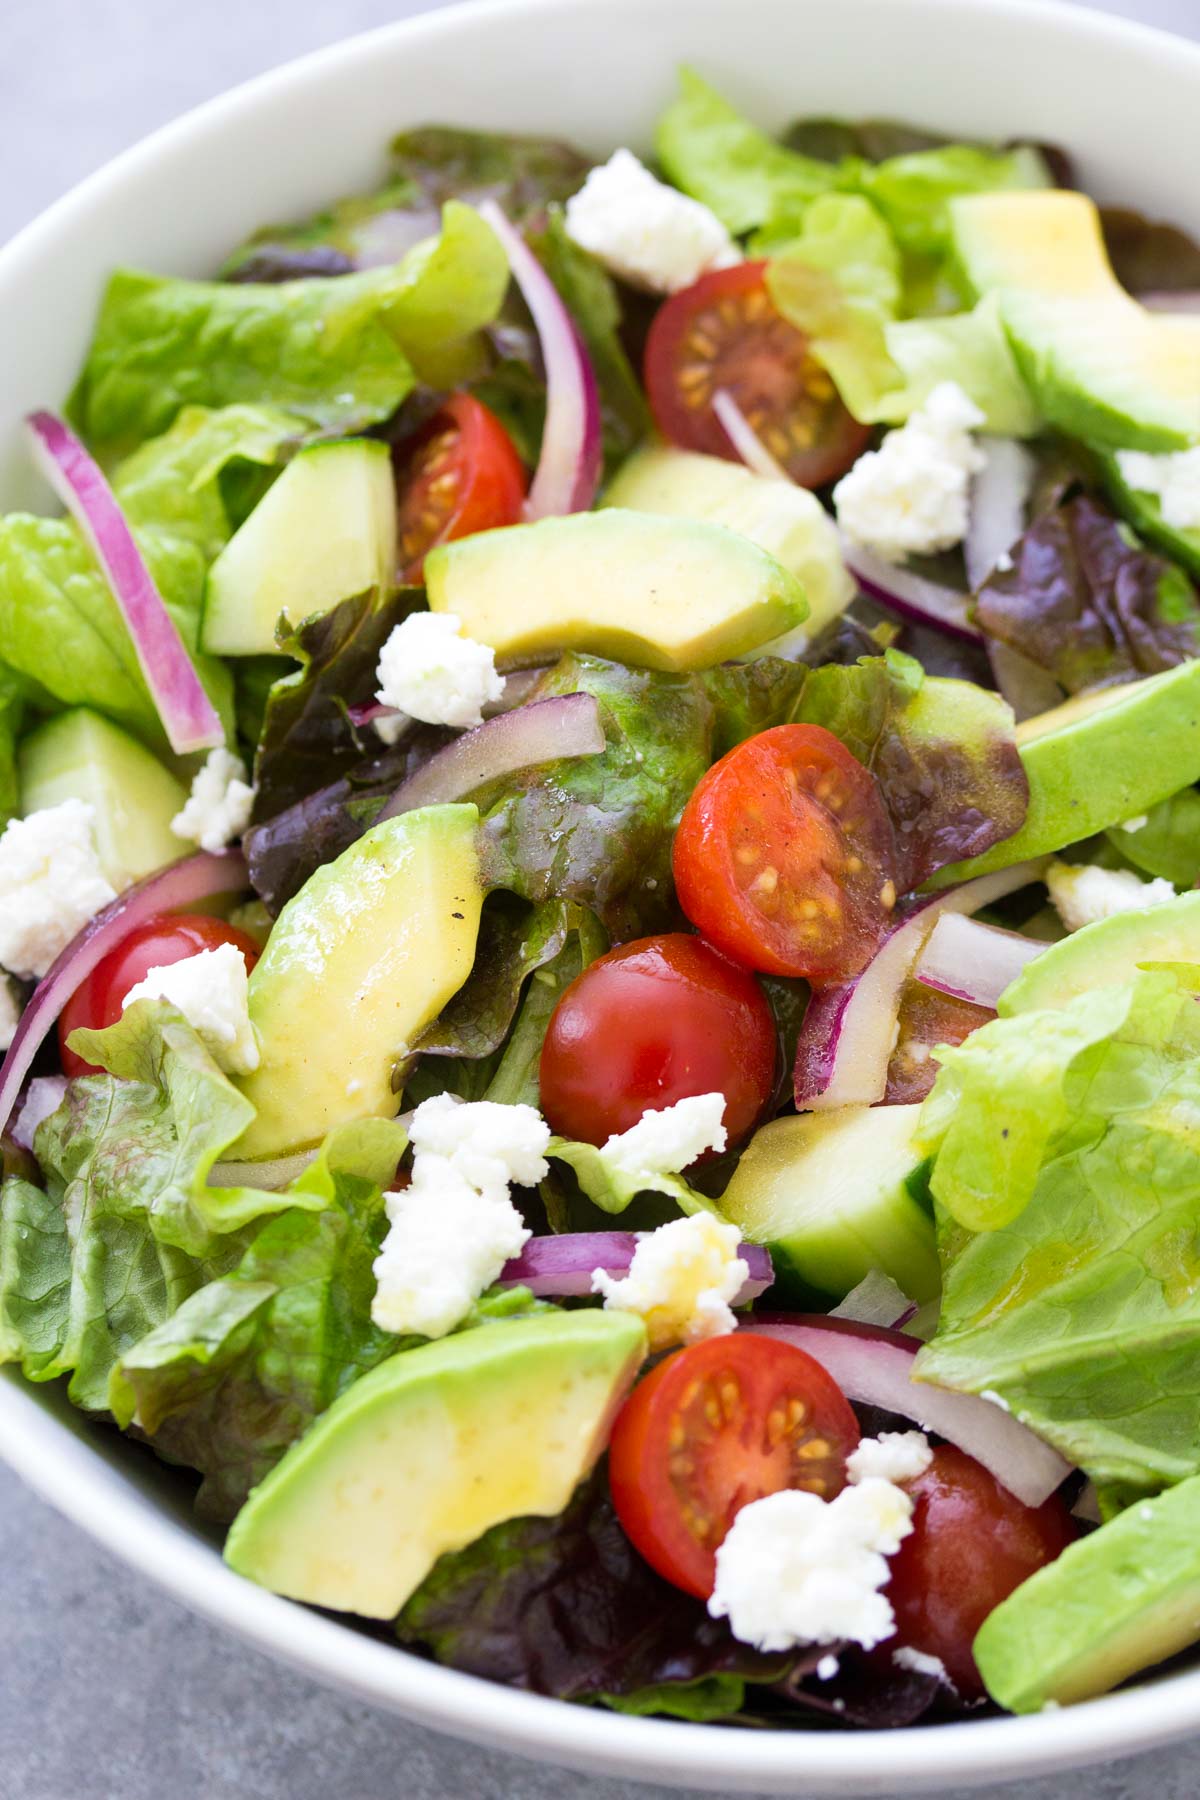 Simple Green Salad Recipe Kristine #39 s Kitchen